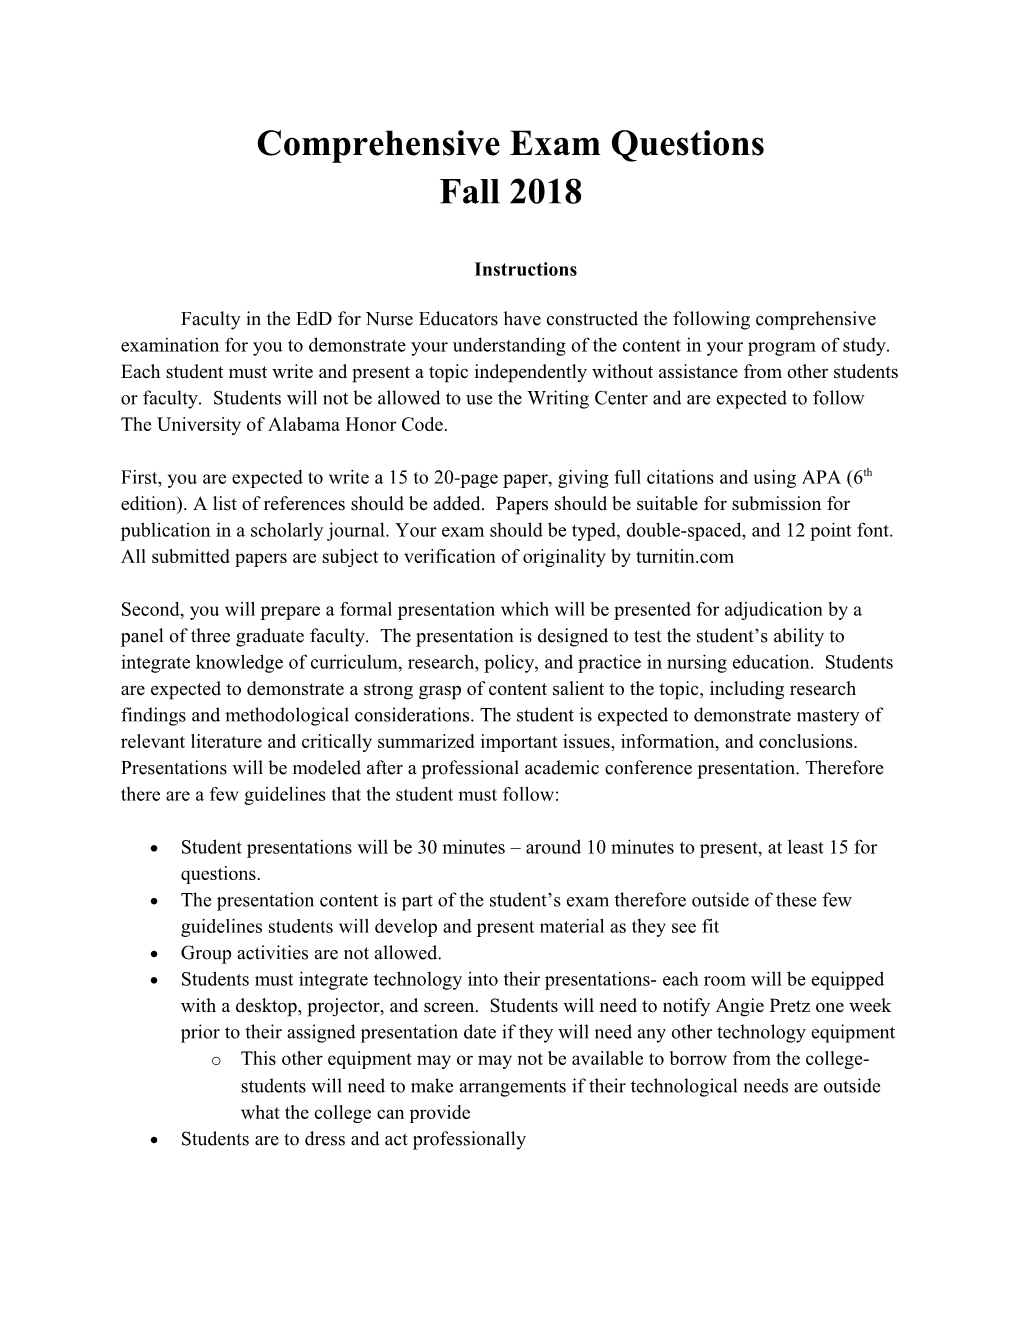 Comprehensive Exam Questions Fall 2018